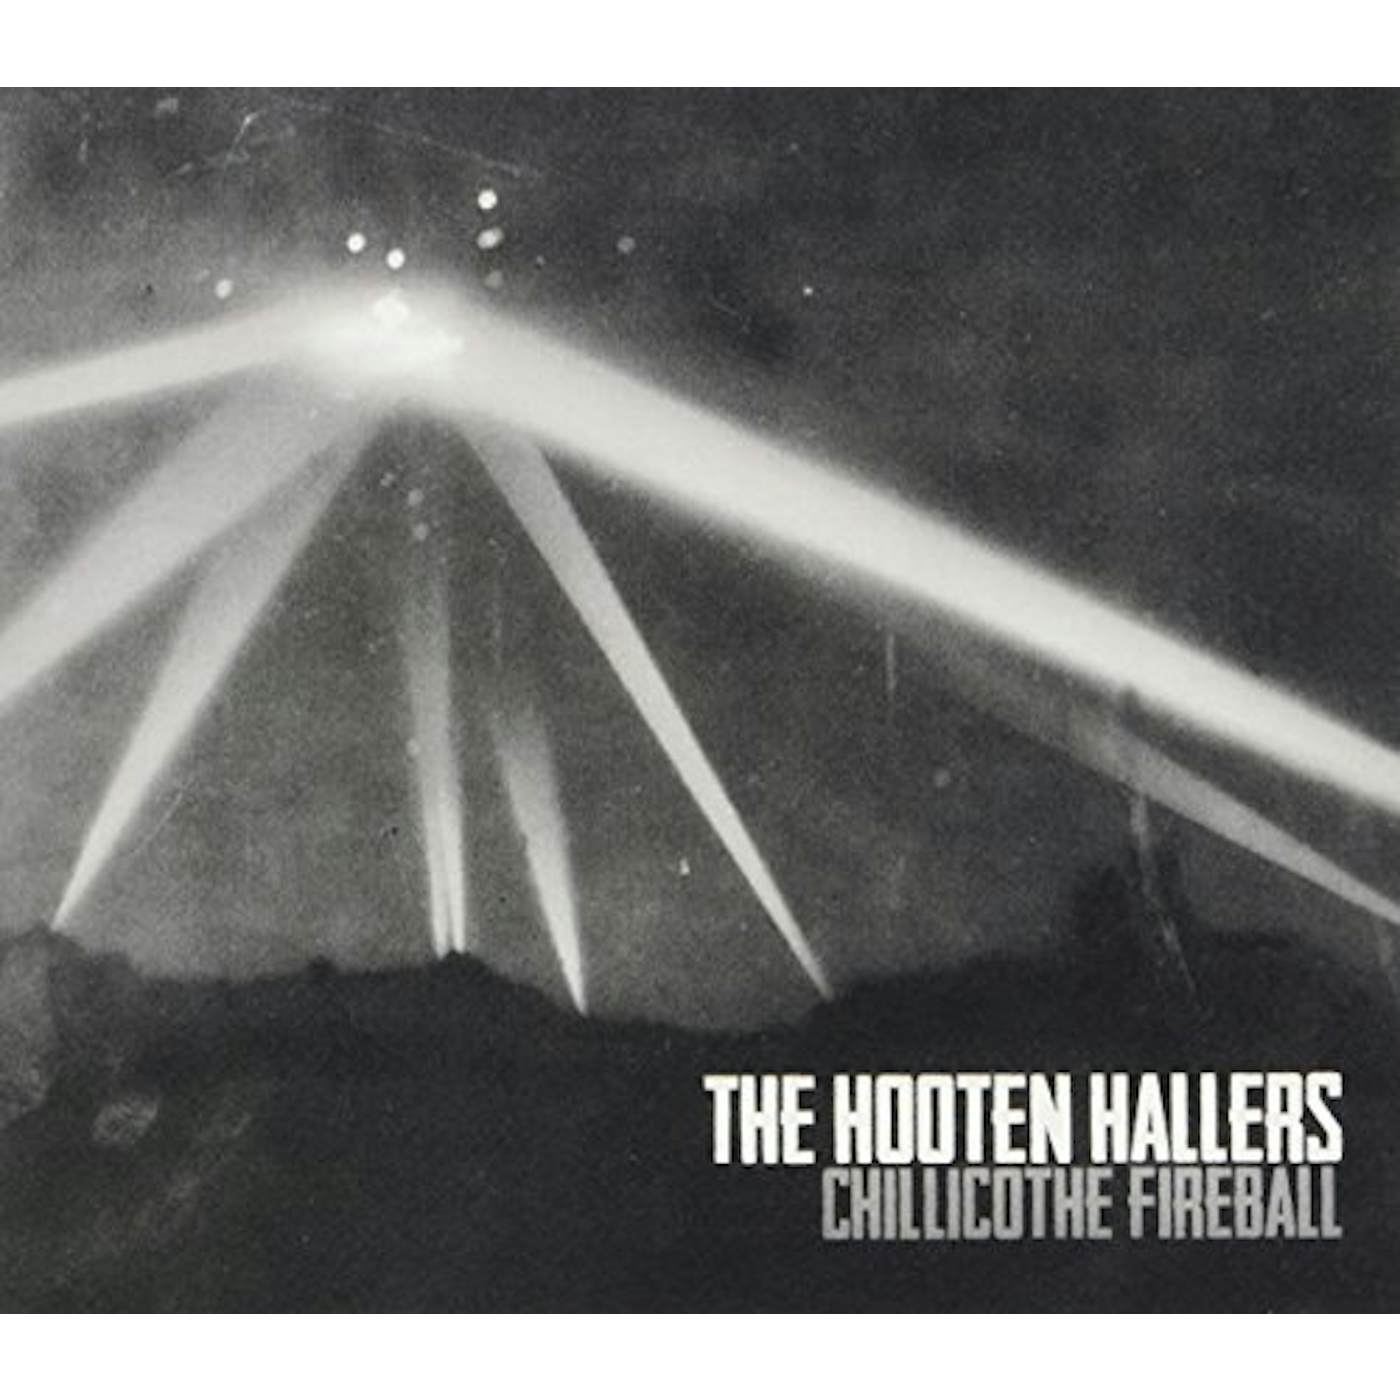 The Hooten Hallers CHILLICOTHE FIREBALL CD